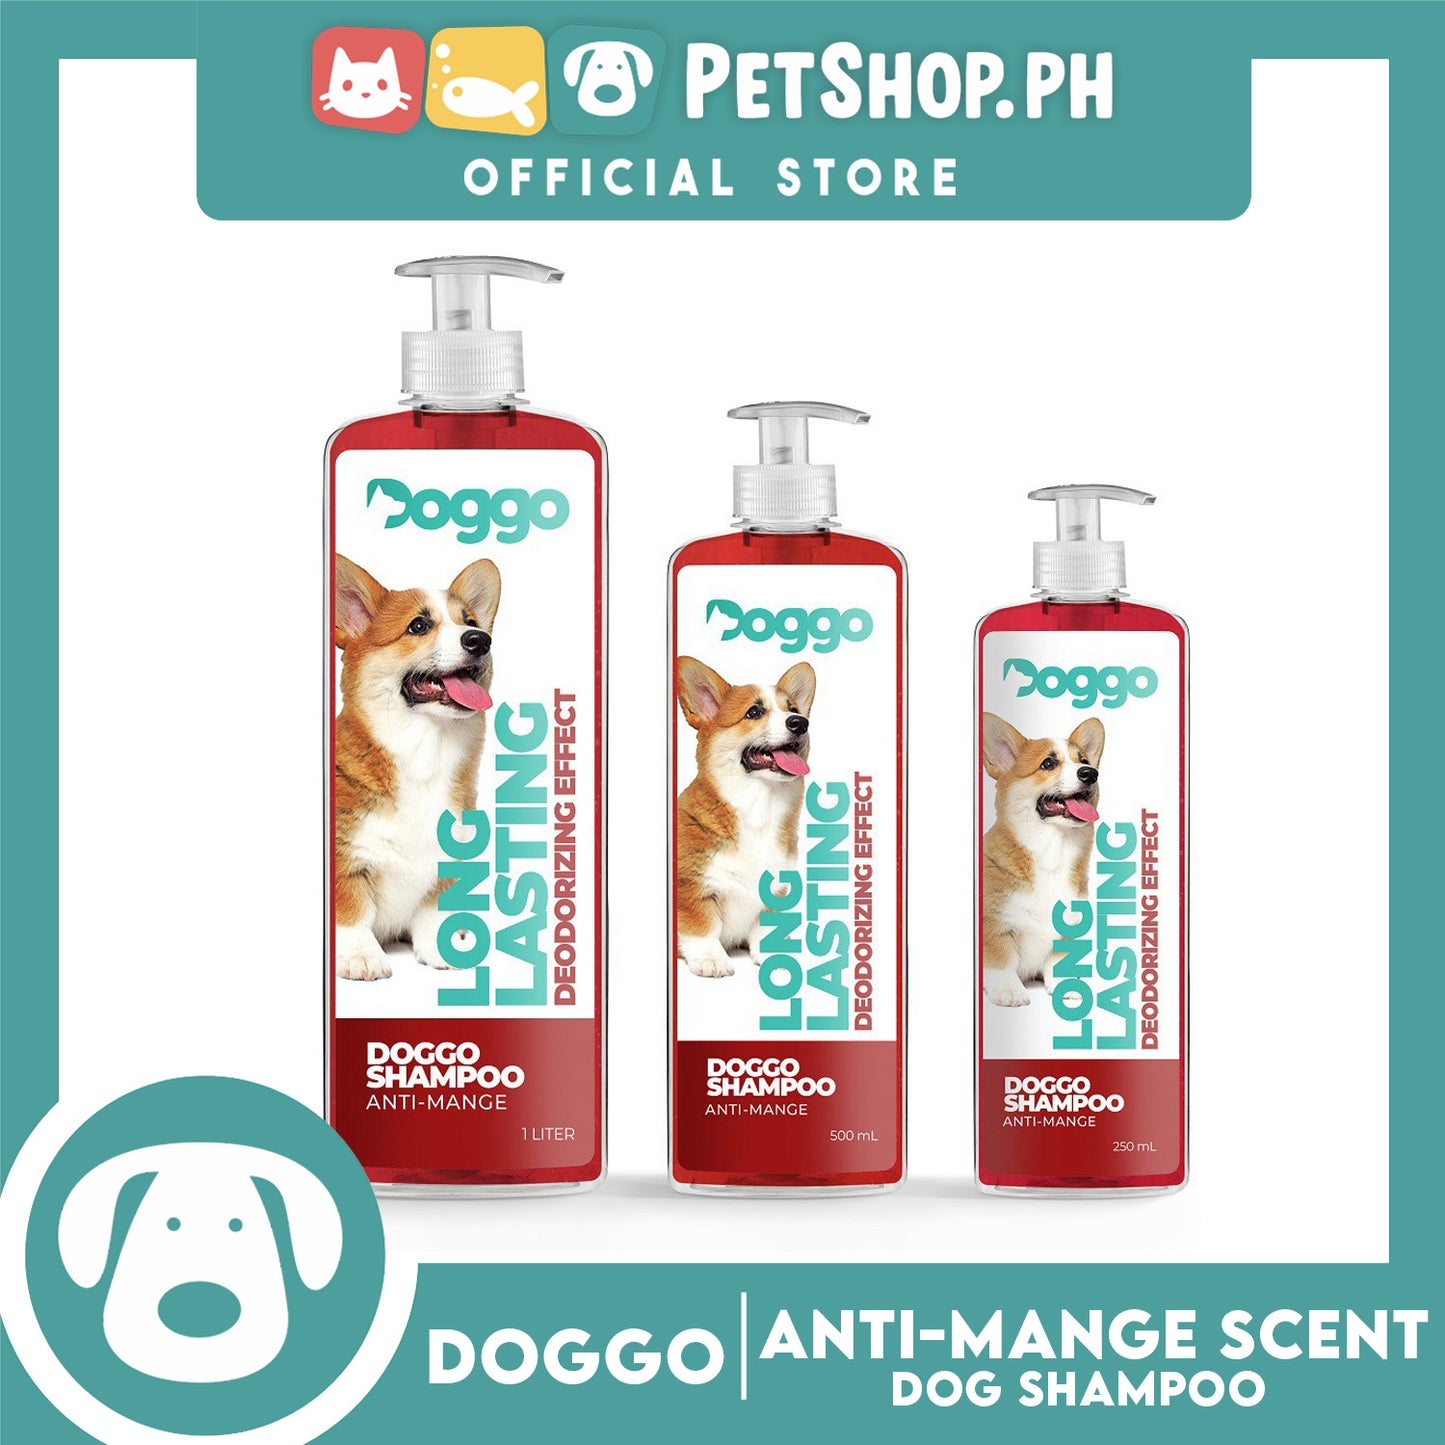 Doggo Shampoo Long Lasting Deodorizing Effect 1 Liter (Anti-Mange) Shampoo for Your Pet